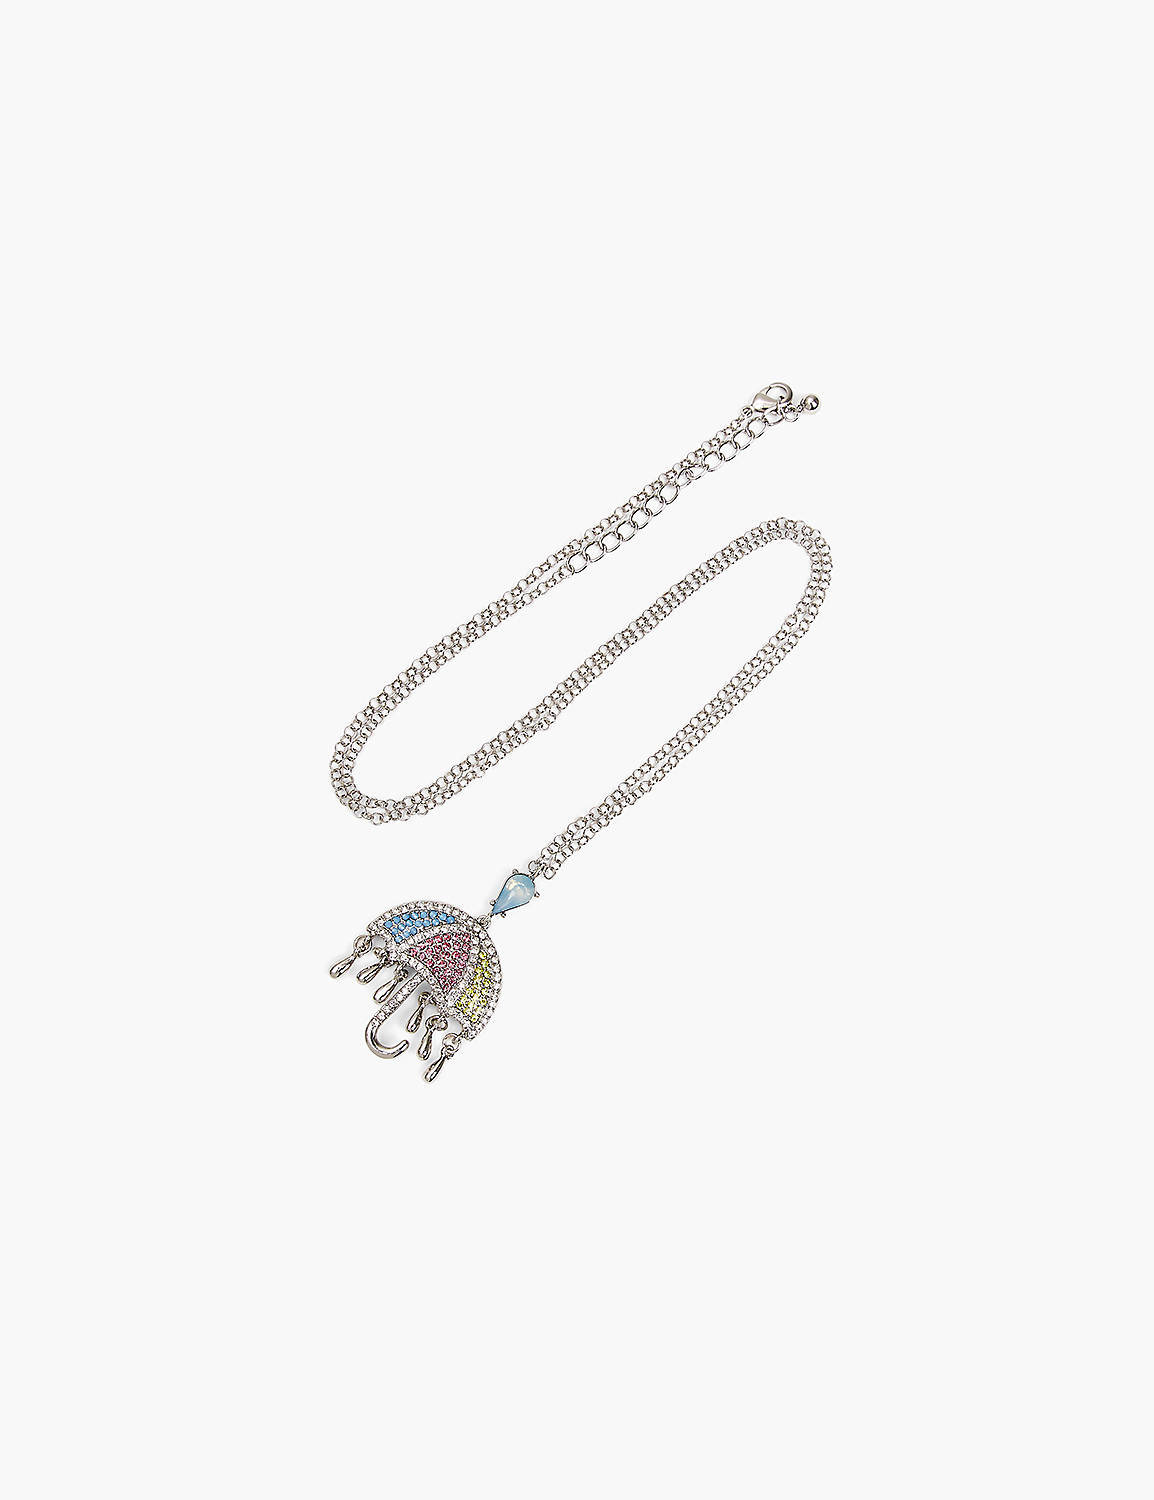 Pave Umbrella Pendant Necklace Product Image 1